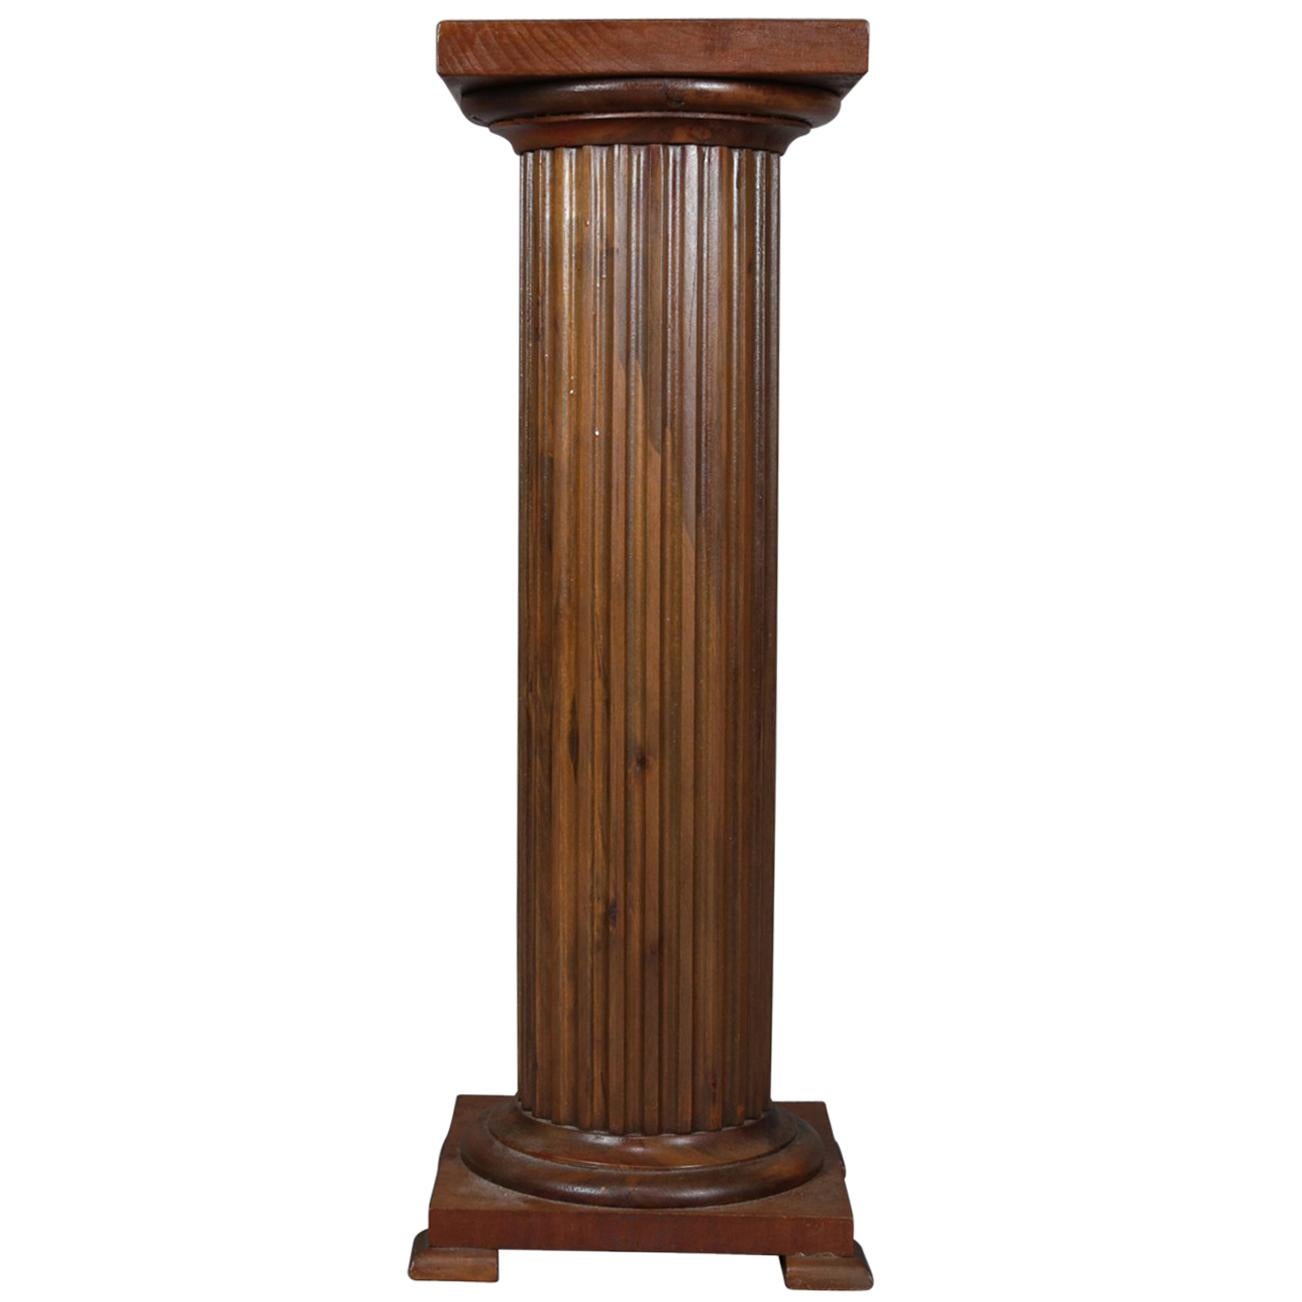 Antique Classical Carved Oak Corinthian Column Sculpture Display Stand